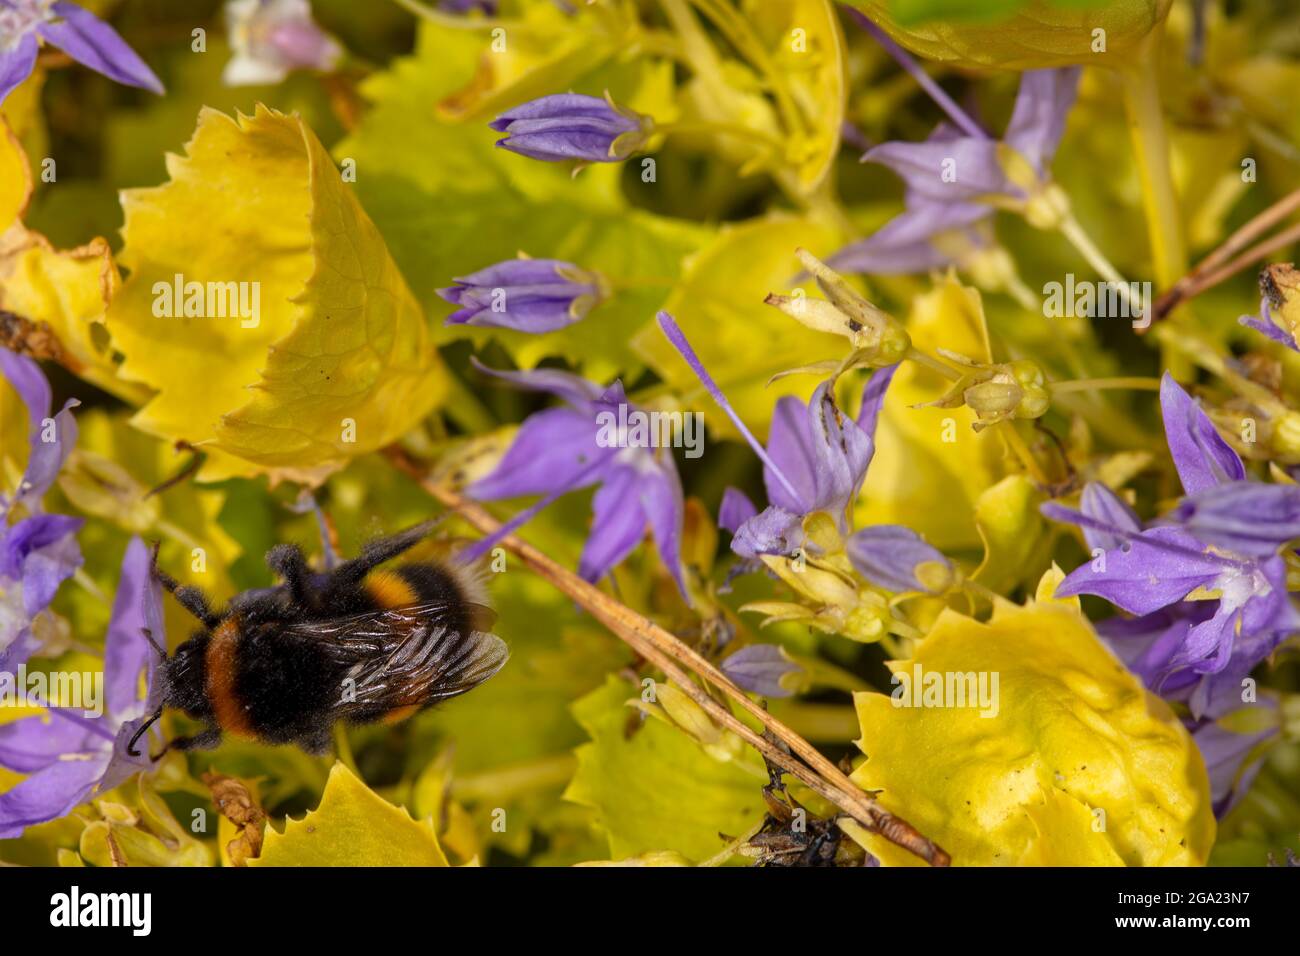 Prolific Campanula Garganica ‘Dickson’s Gold’ in full flower, close-up plant portrait Stock Photo